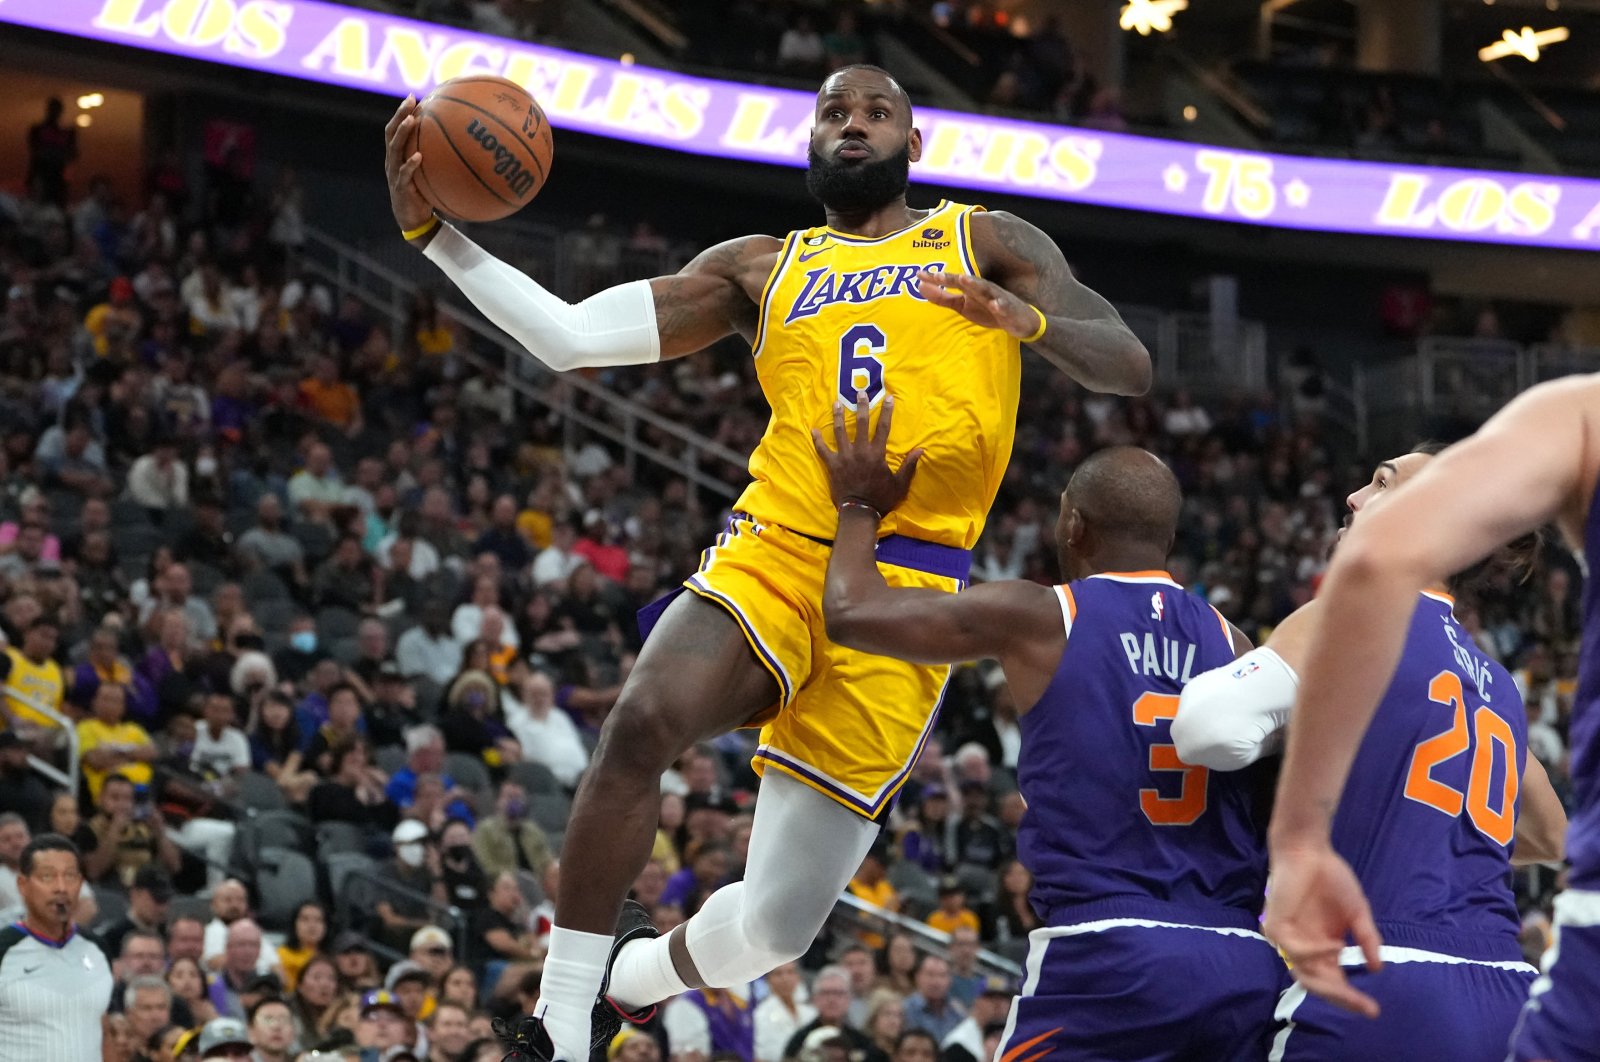 Los Angeles Lakers forward LeBron James (6) shoots against Phoenix Suns guard Chris Paul (3) during a preseason game at T-Mobile Arena. Las Vegas, Nevada, Oct 5, 2022. (Reuters Photo)